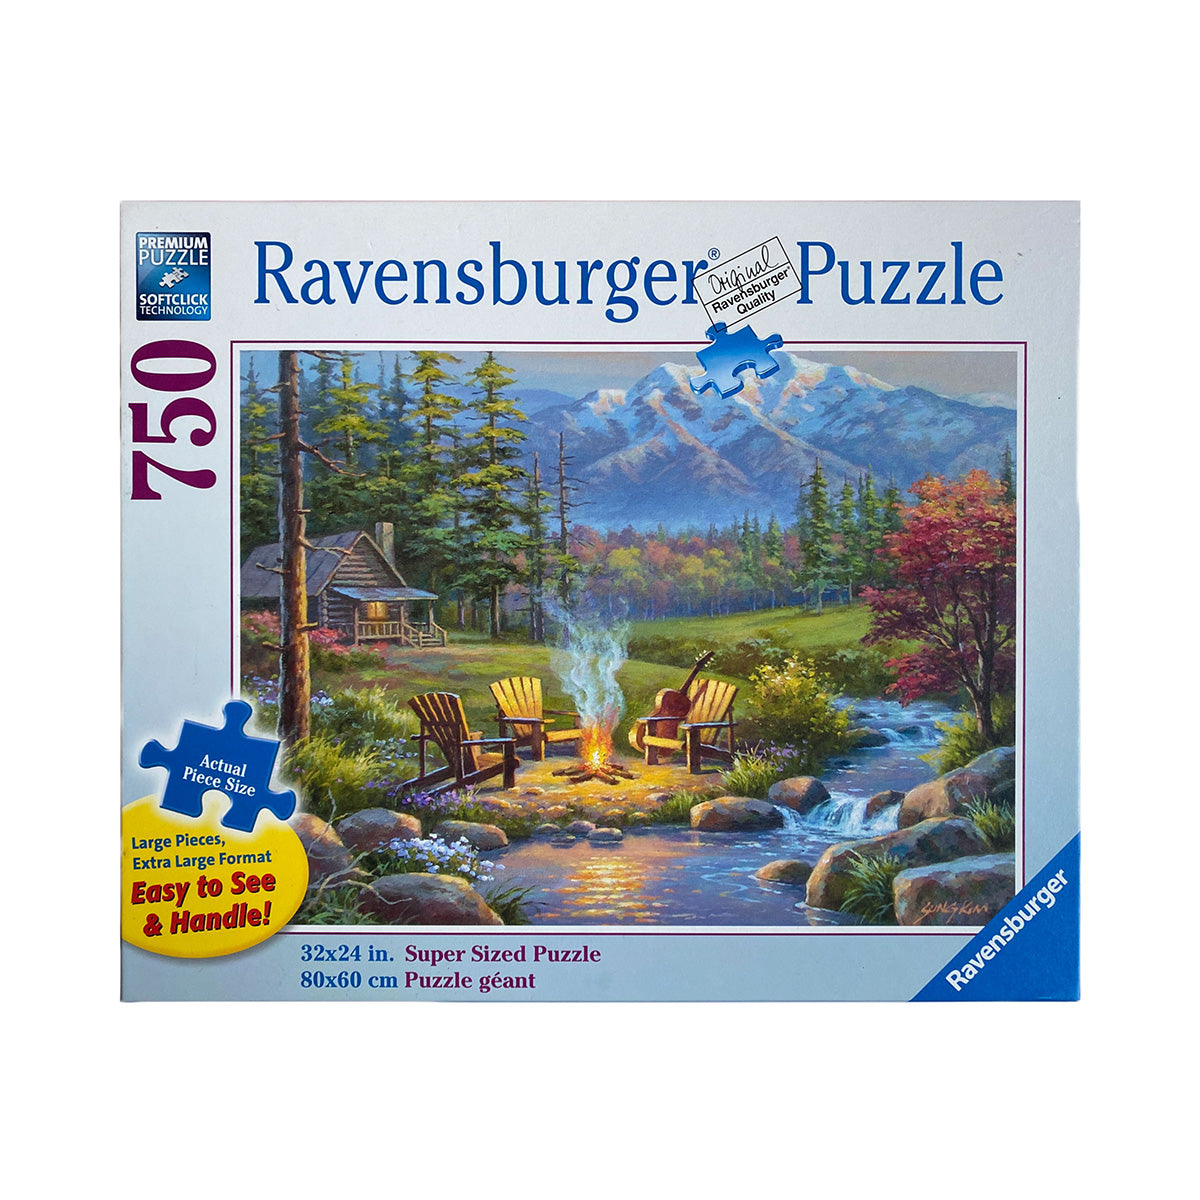 Photo of box of Riverside Livingroom Ravensburger puzzle.